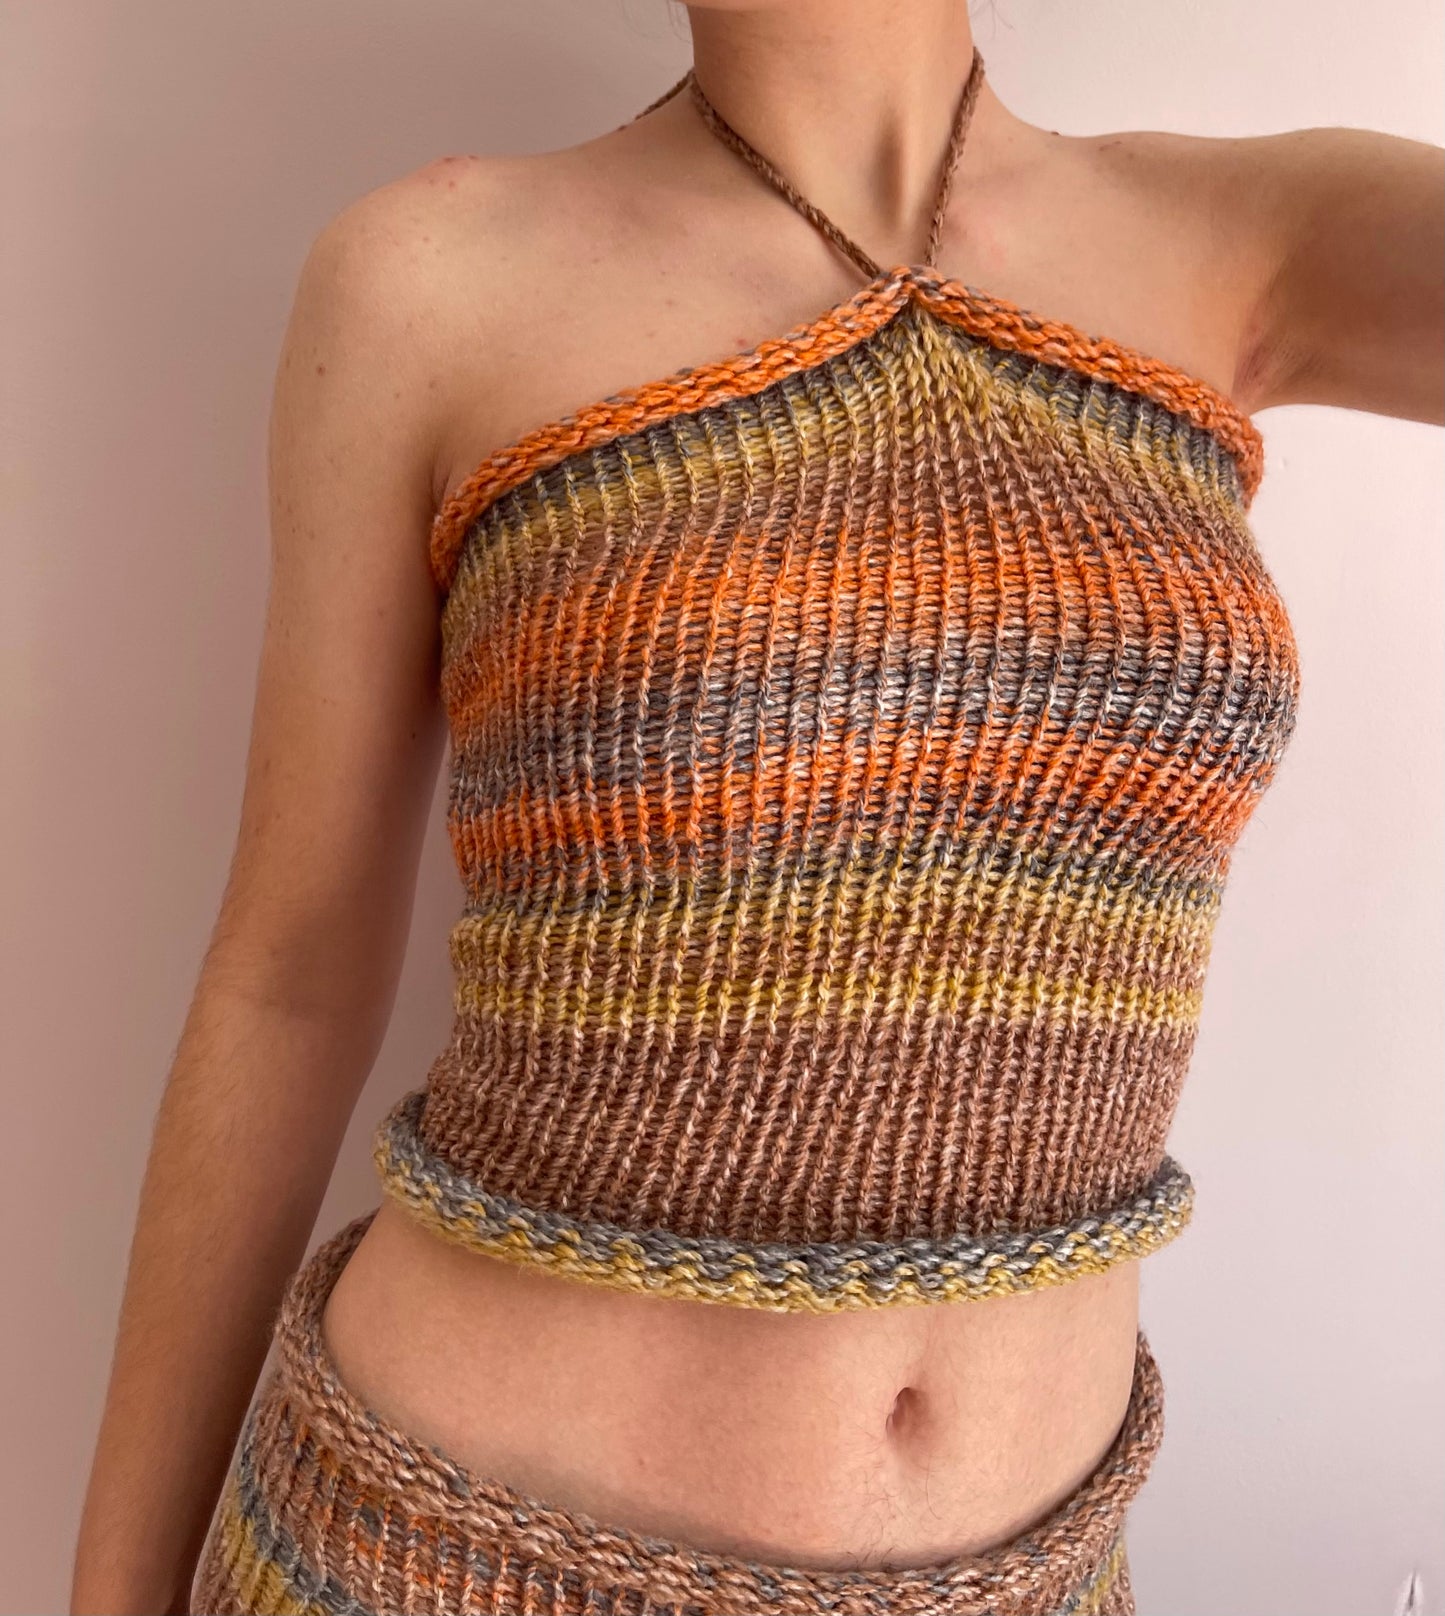 Handmade knitted halter neck top in orange, mustard yellow and grey